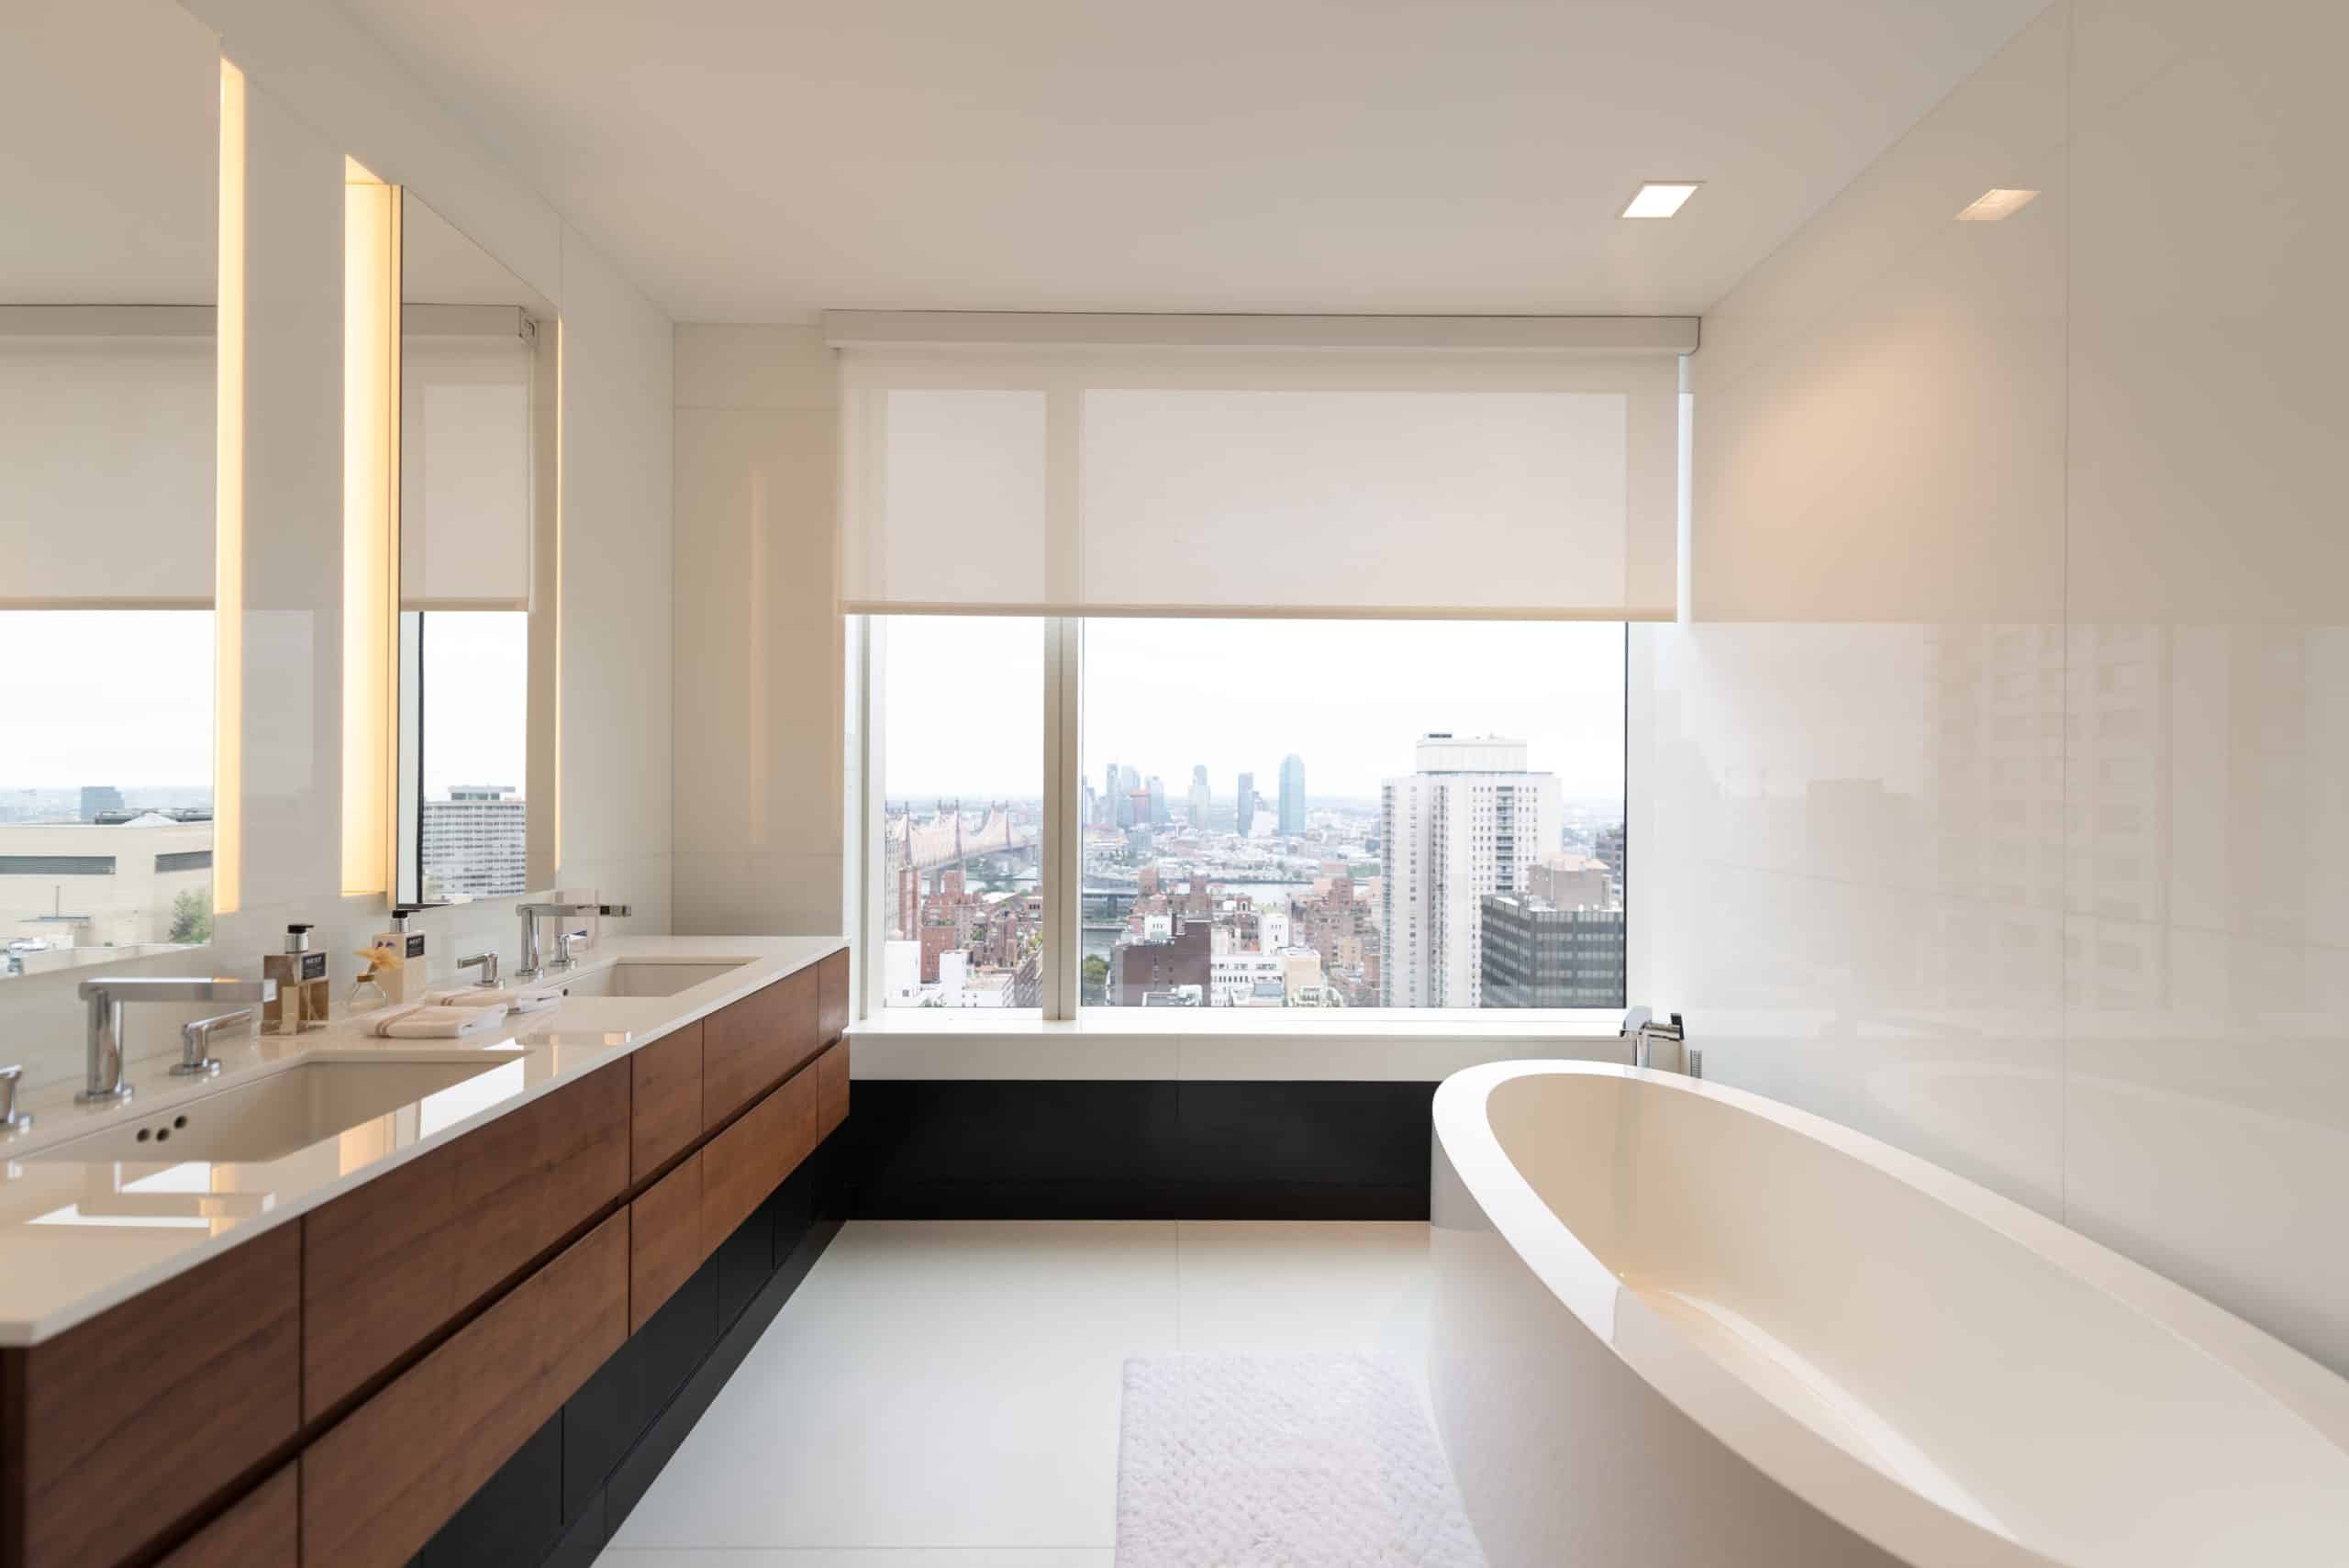 Luxury bathroom interior design New York City